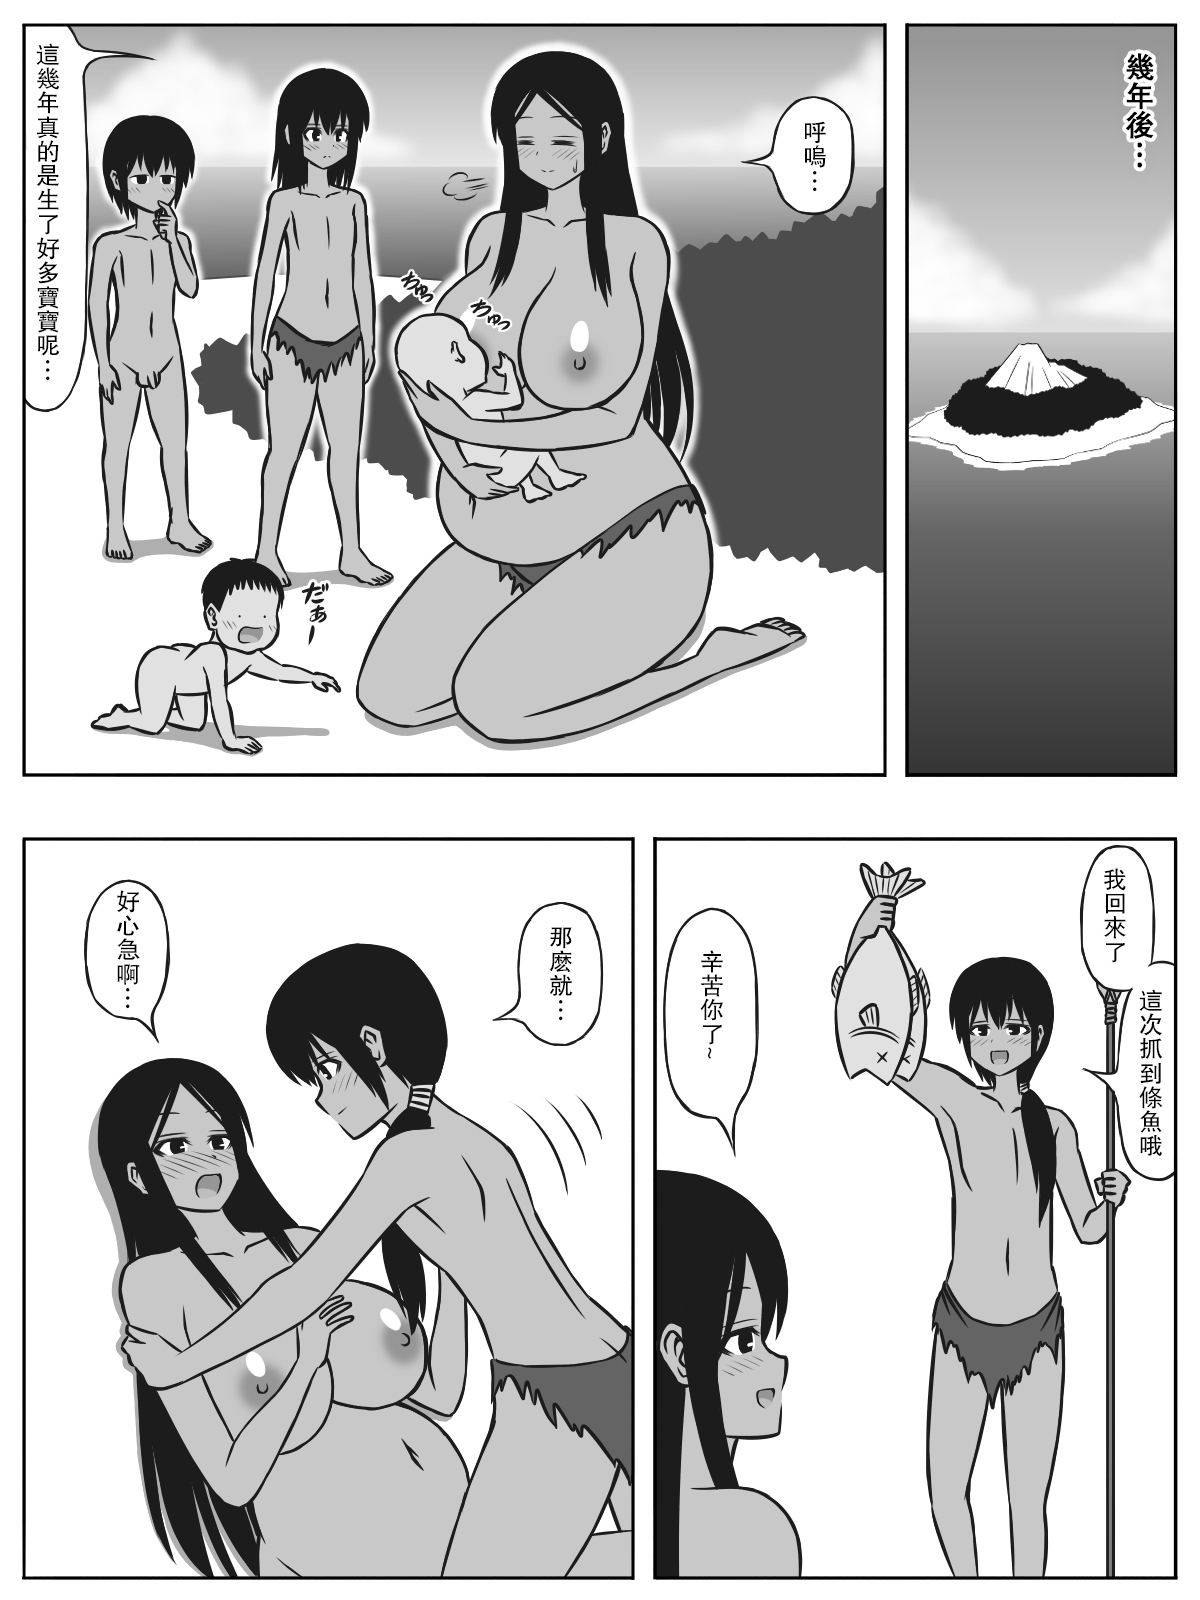 [(sato→ siruto→)Sato]無人島にショタとお姉さんが流れ着いたら子作りくらいしかやる事は無い